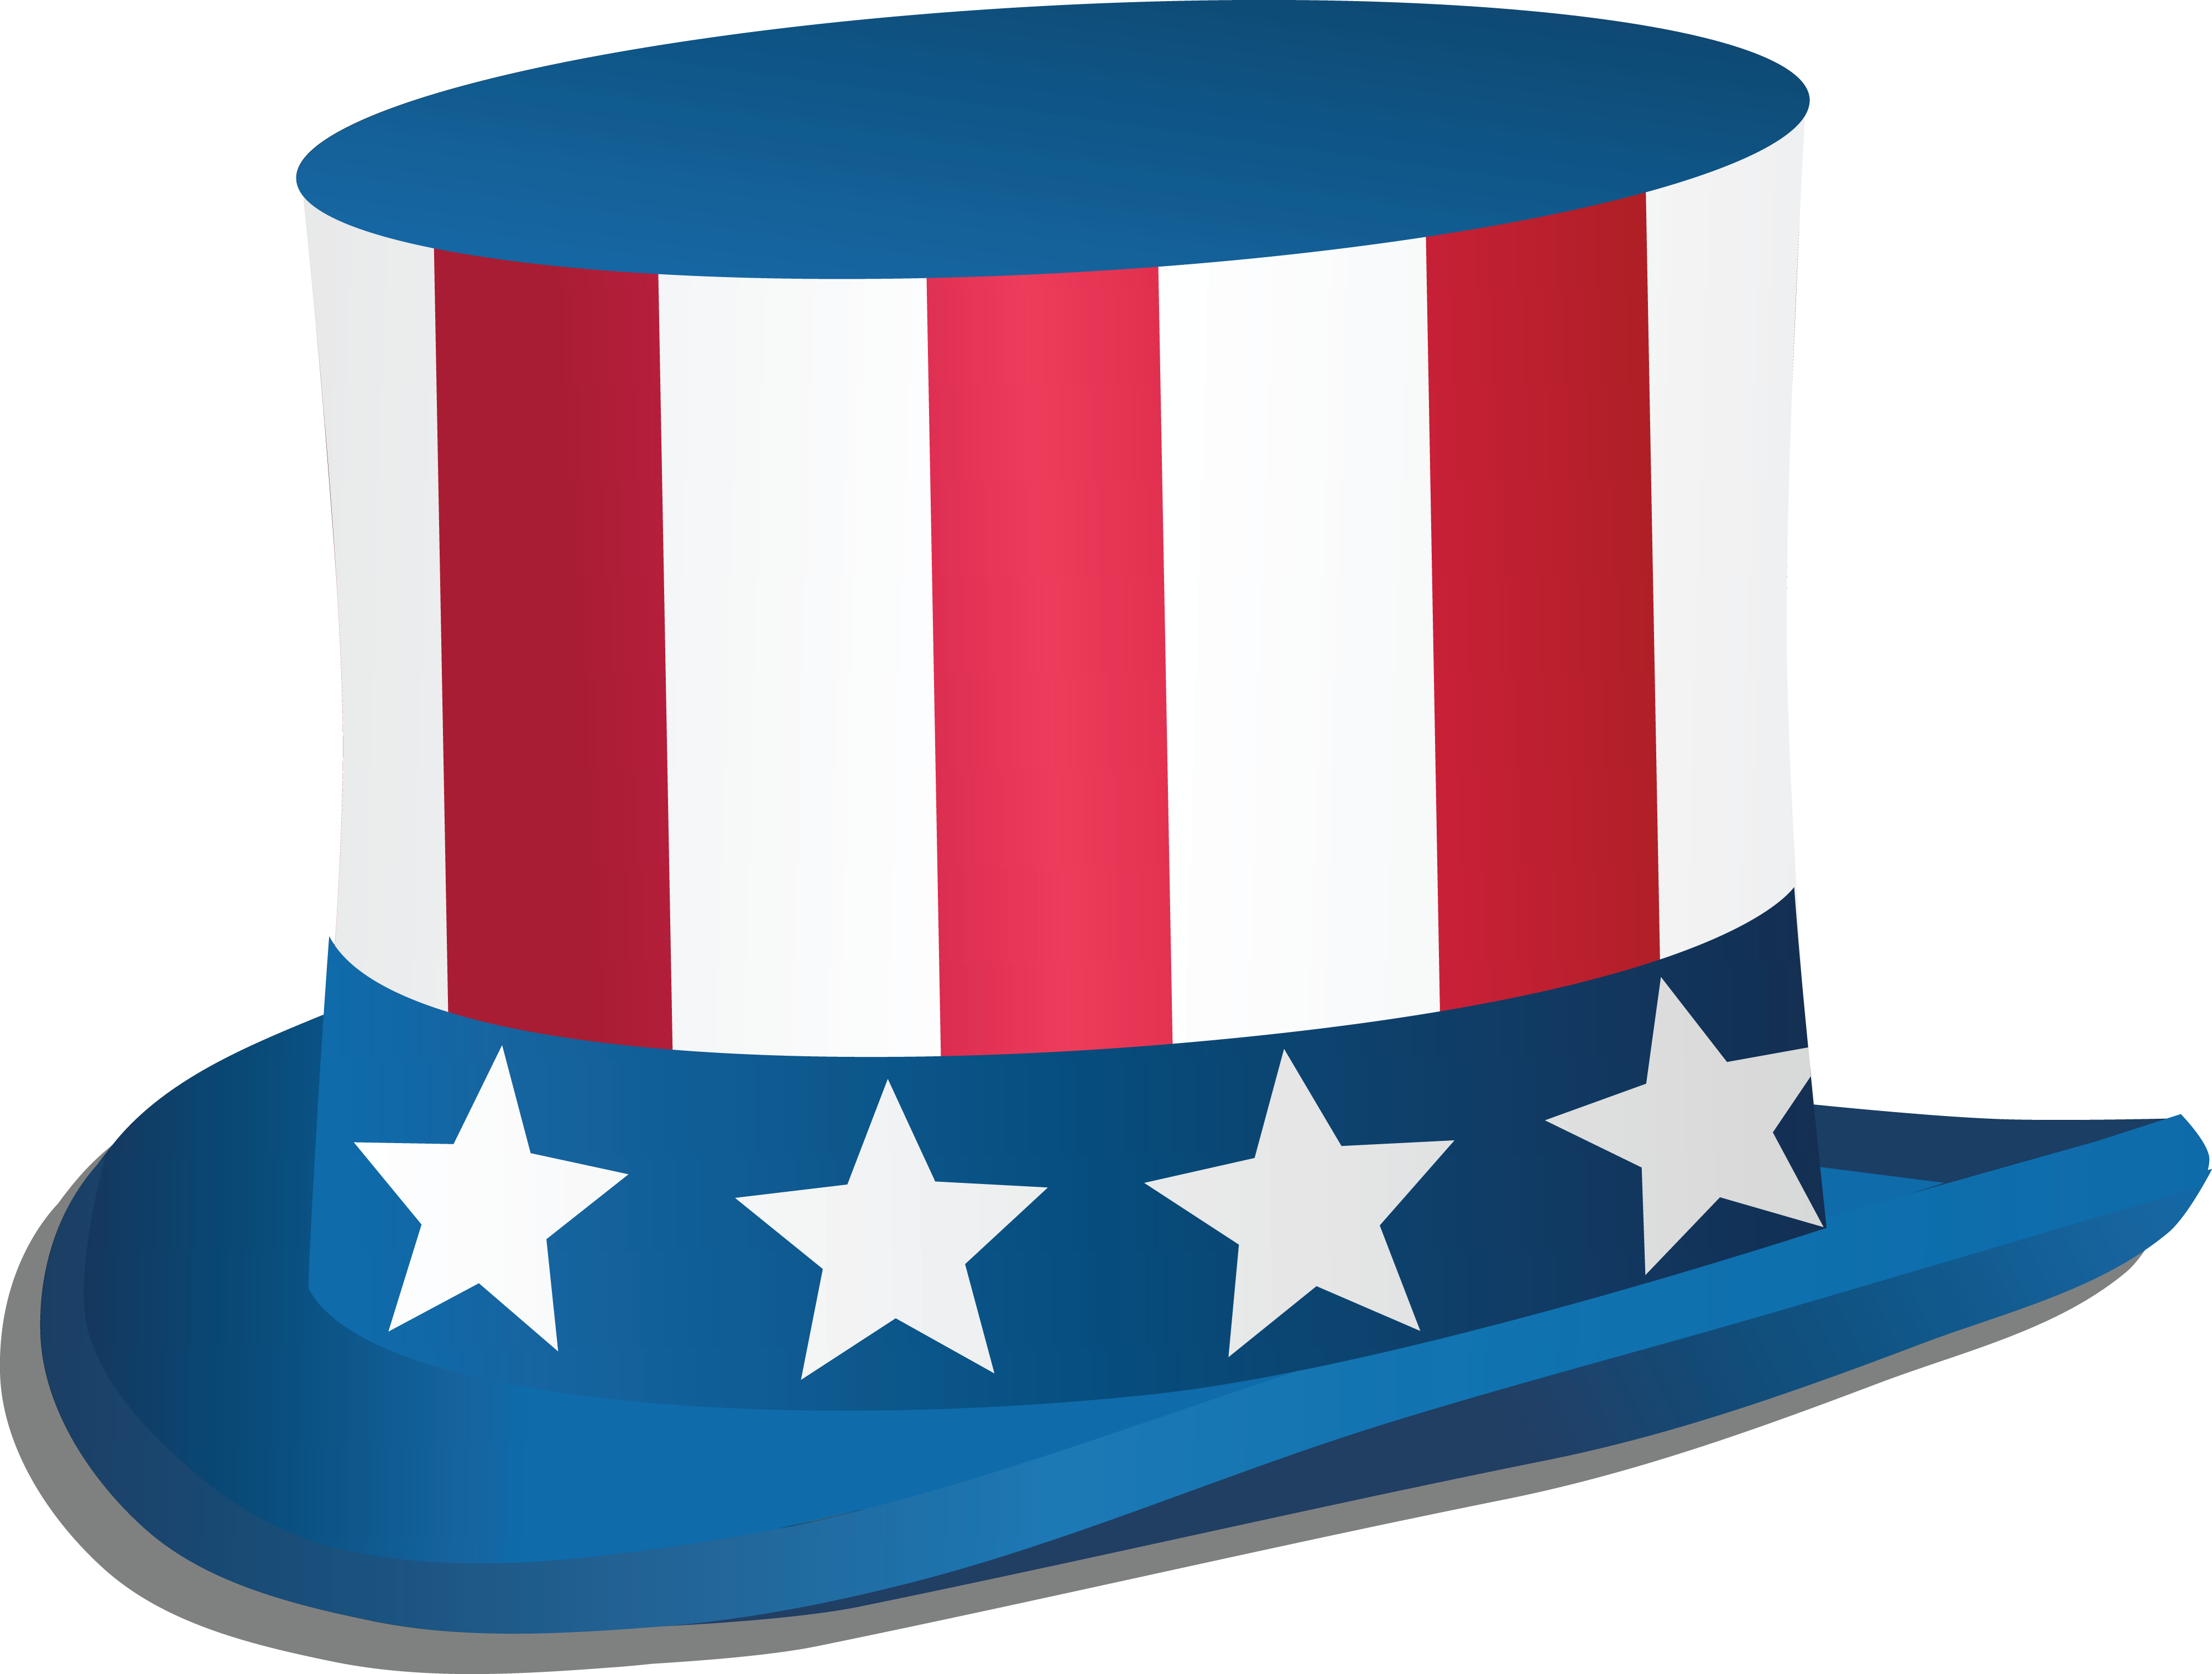 Шляпа америка. Шляпа дяди Сэма. Дядя Сэм в американской шляпе. Американская цилиндрическая шляпа.